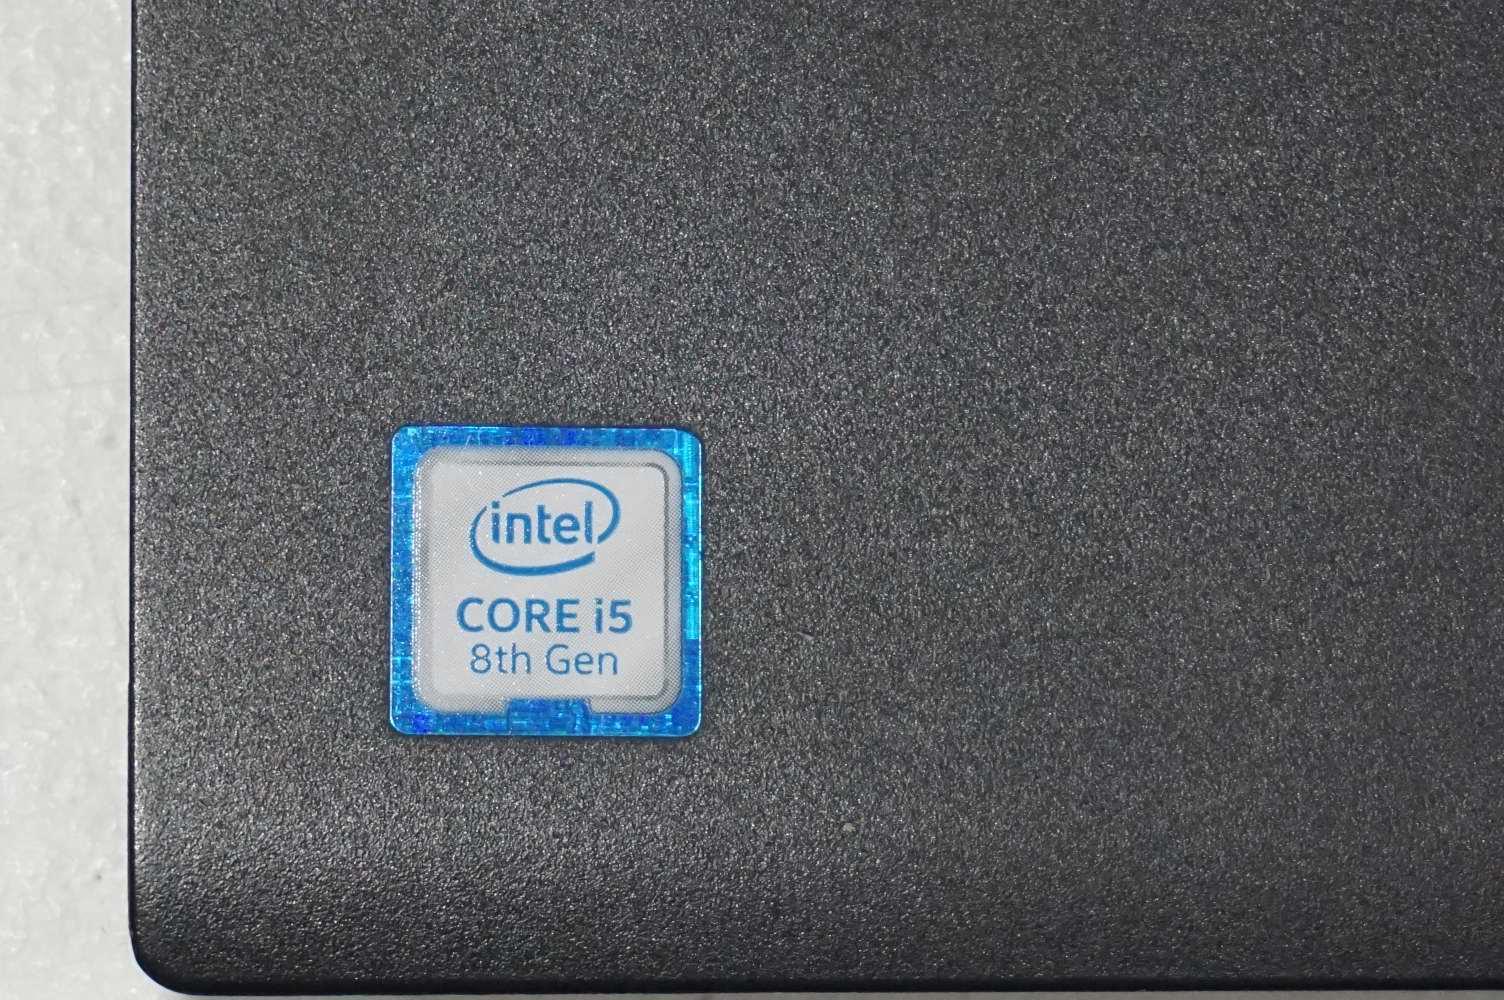 Lenovo T580 8th Gen ThinkPad Intel i5 Laptop (Ser#R90VKWRC)